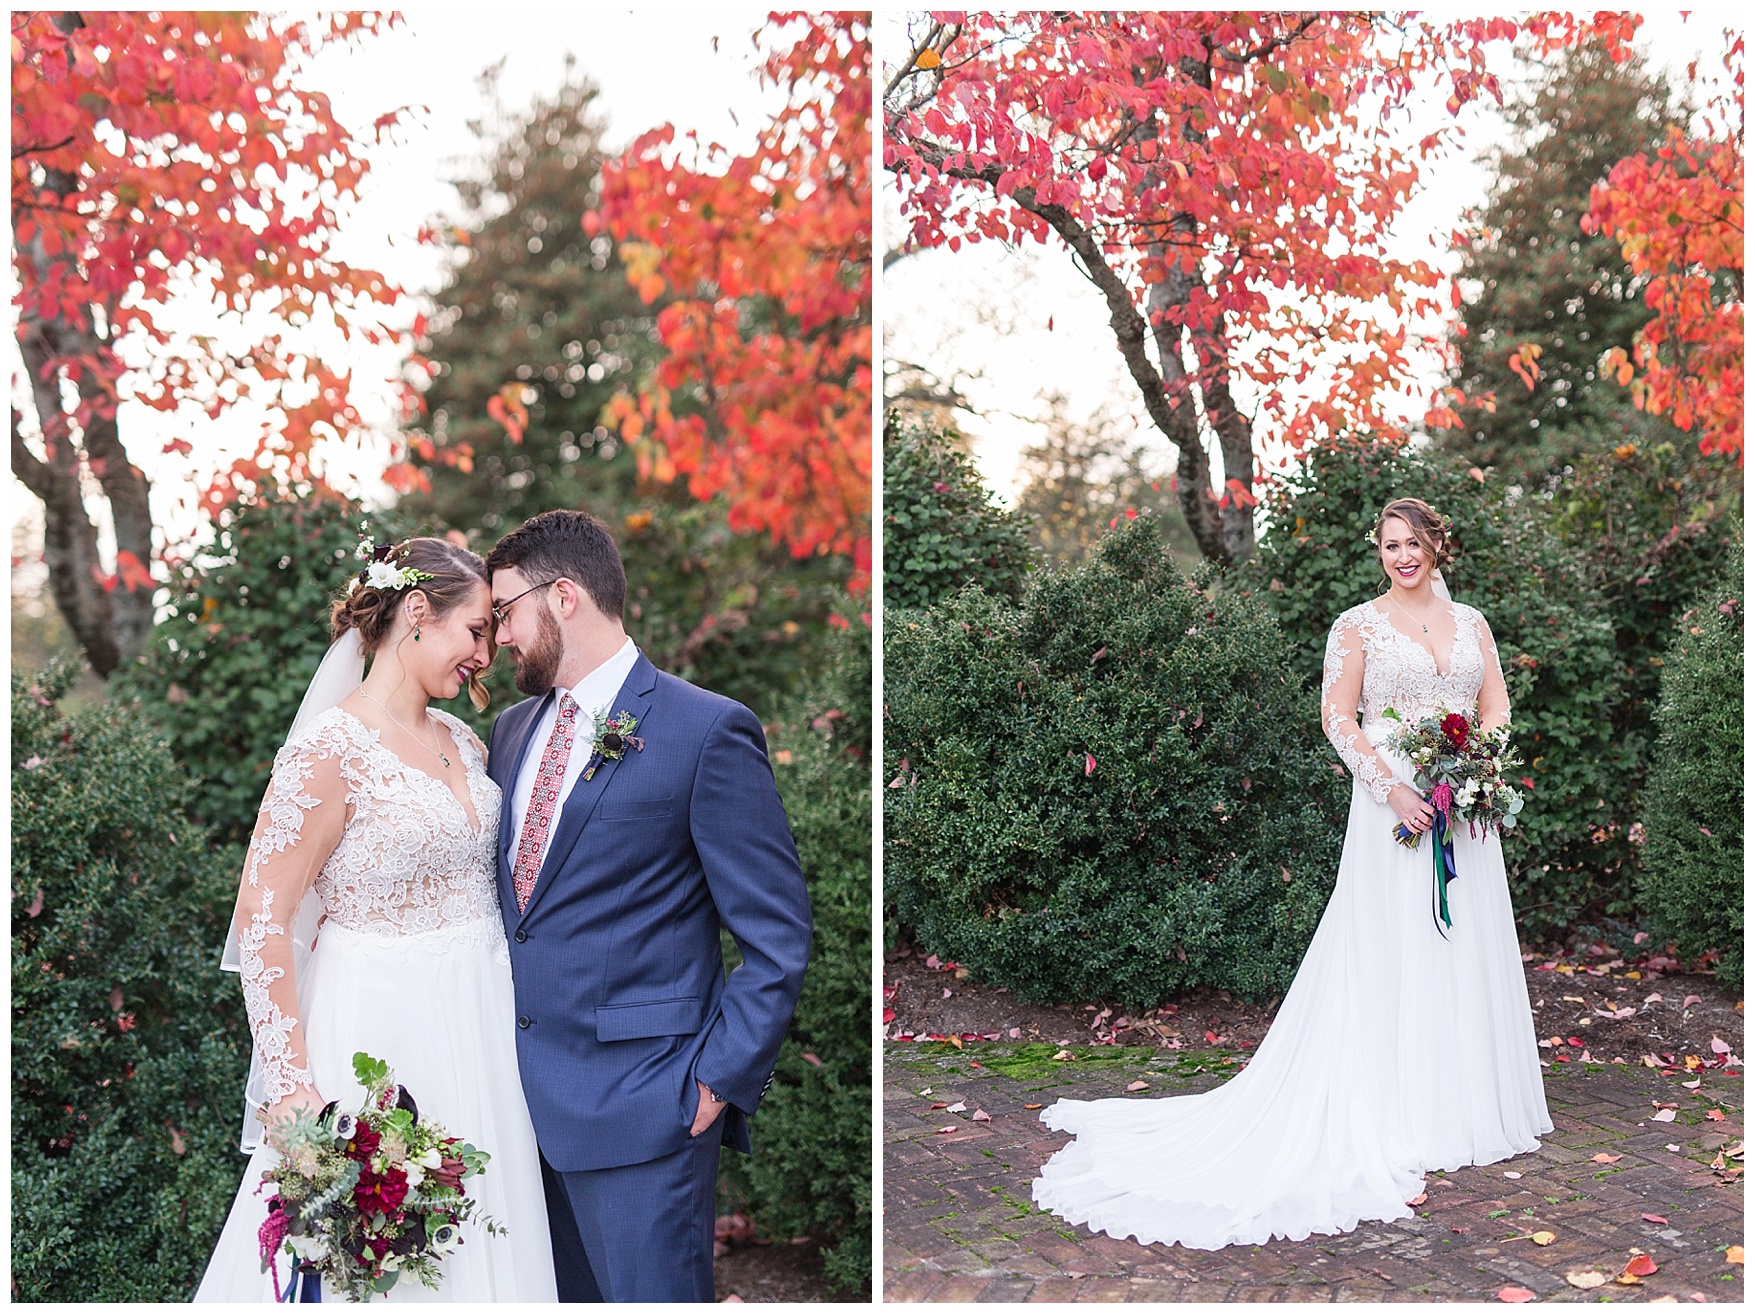 Lynchburg and Charlottesville Wedding Photographer || Fall Wedding at The Trivium Estate in Forest, Virginia || www.ashleyeiban.com